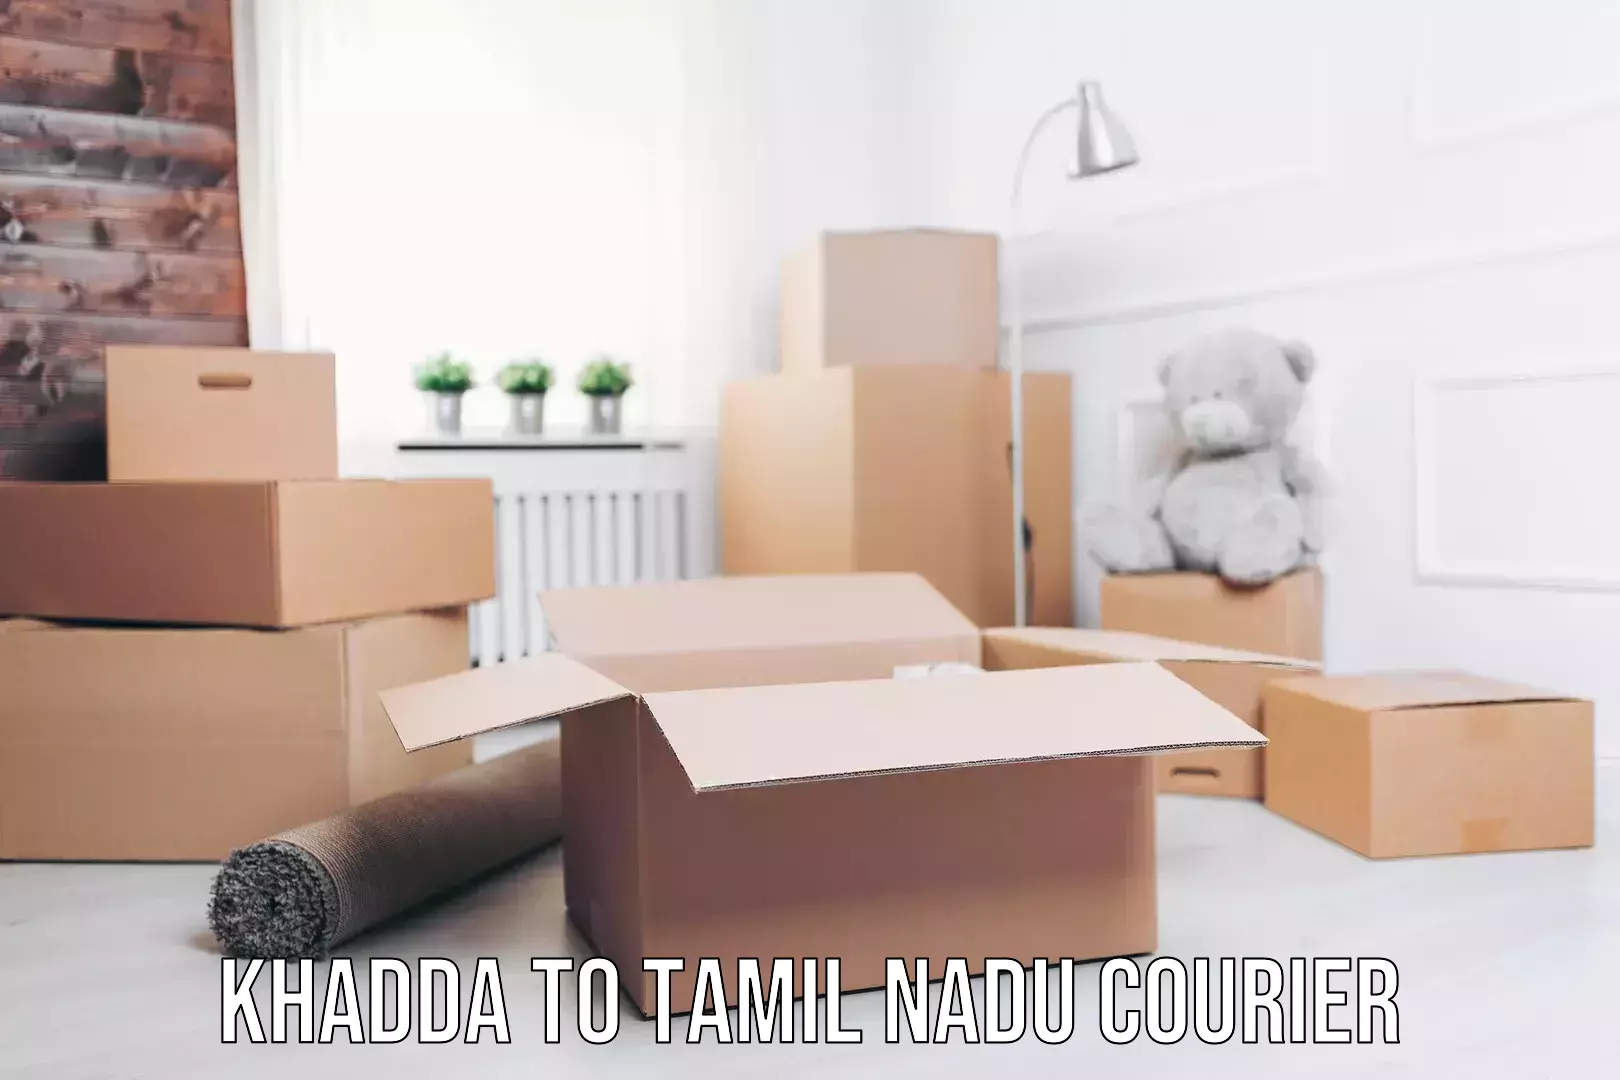 Professional moving company in Khadda to Tamil Nadu